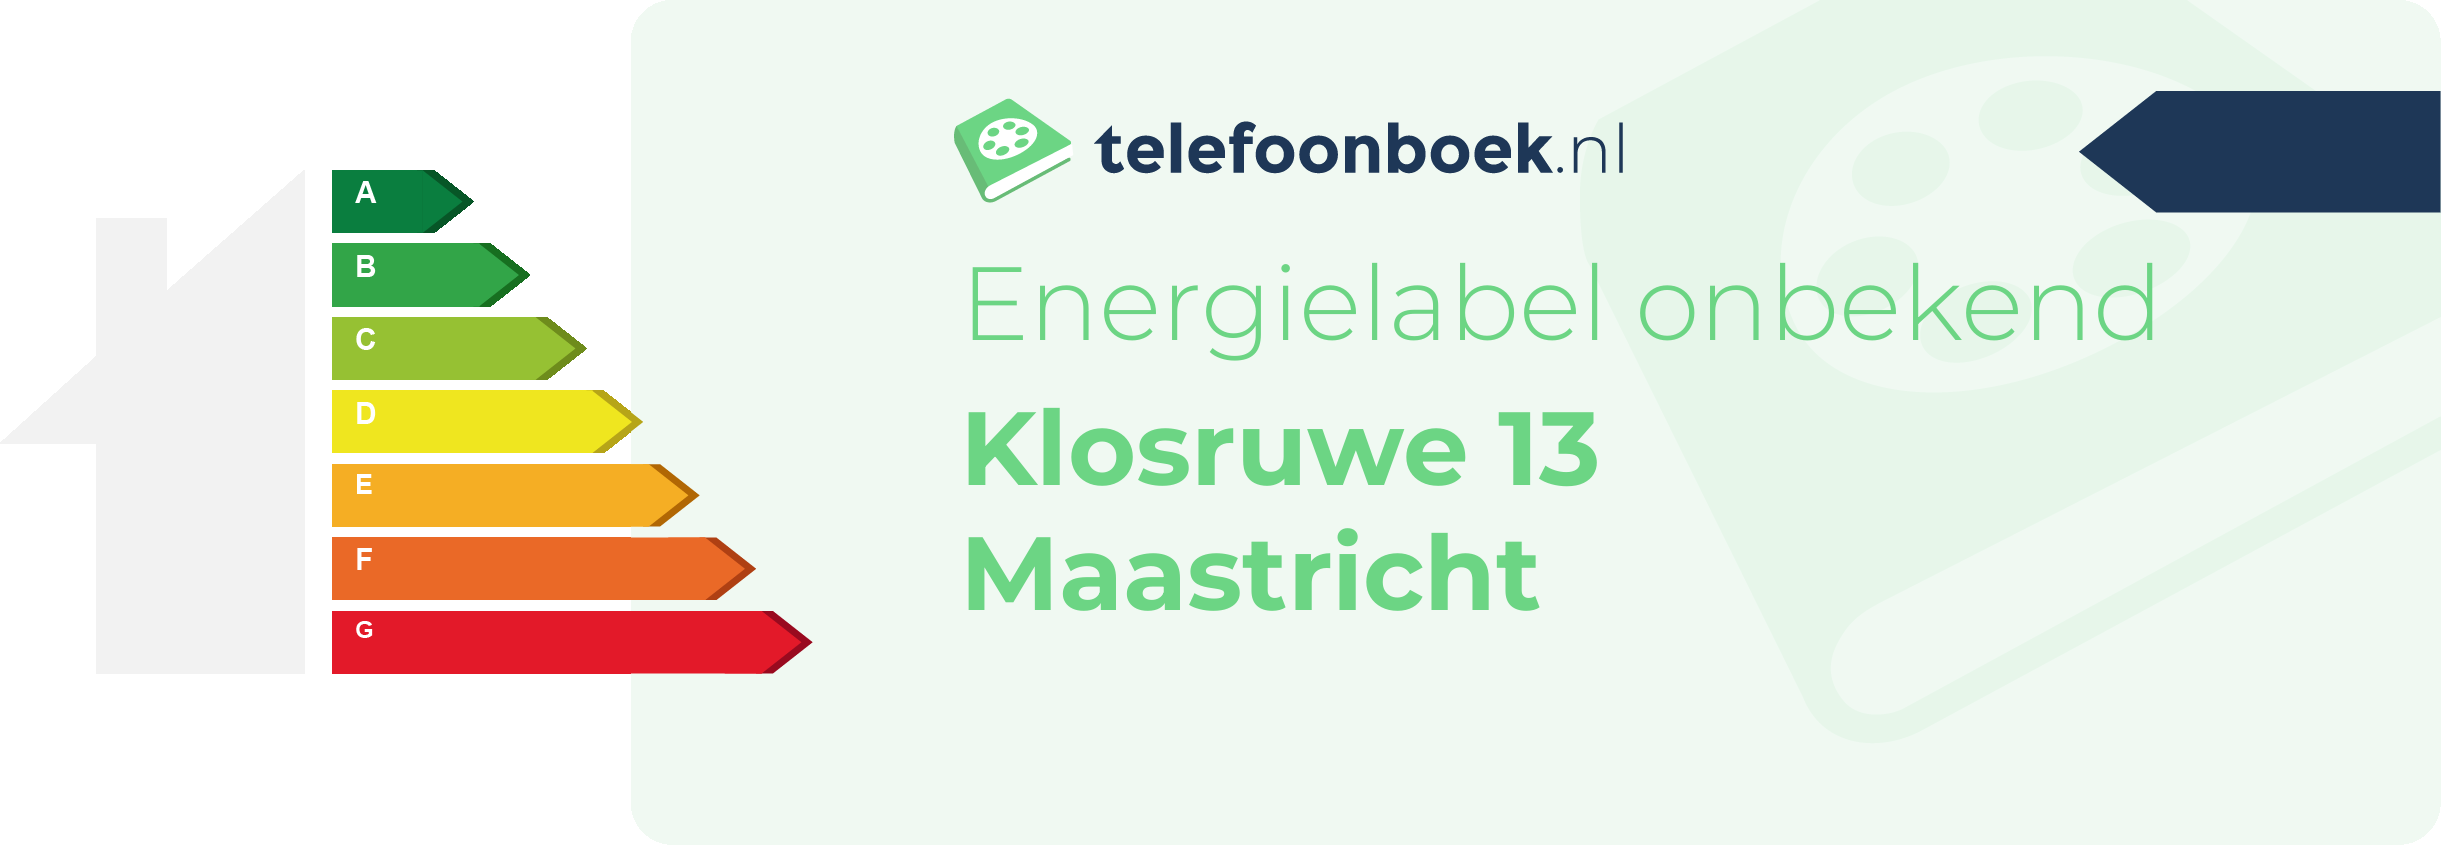 Energielabel Klosruwe 13 Maastricht